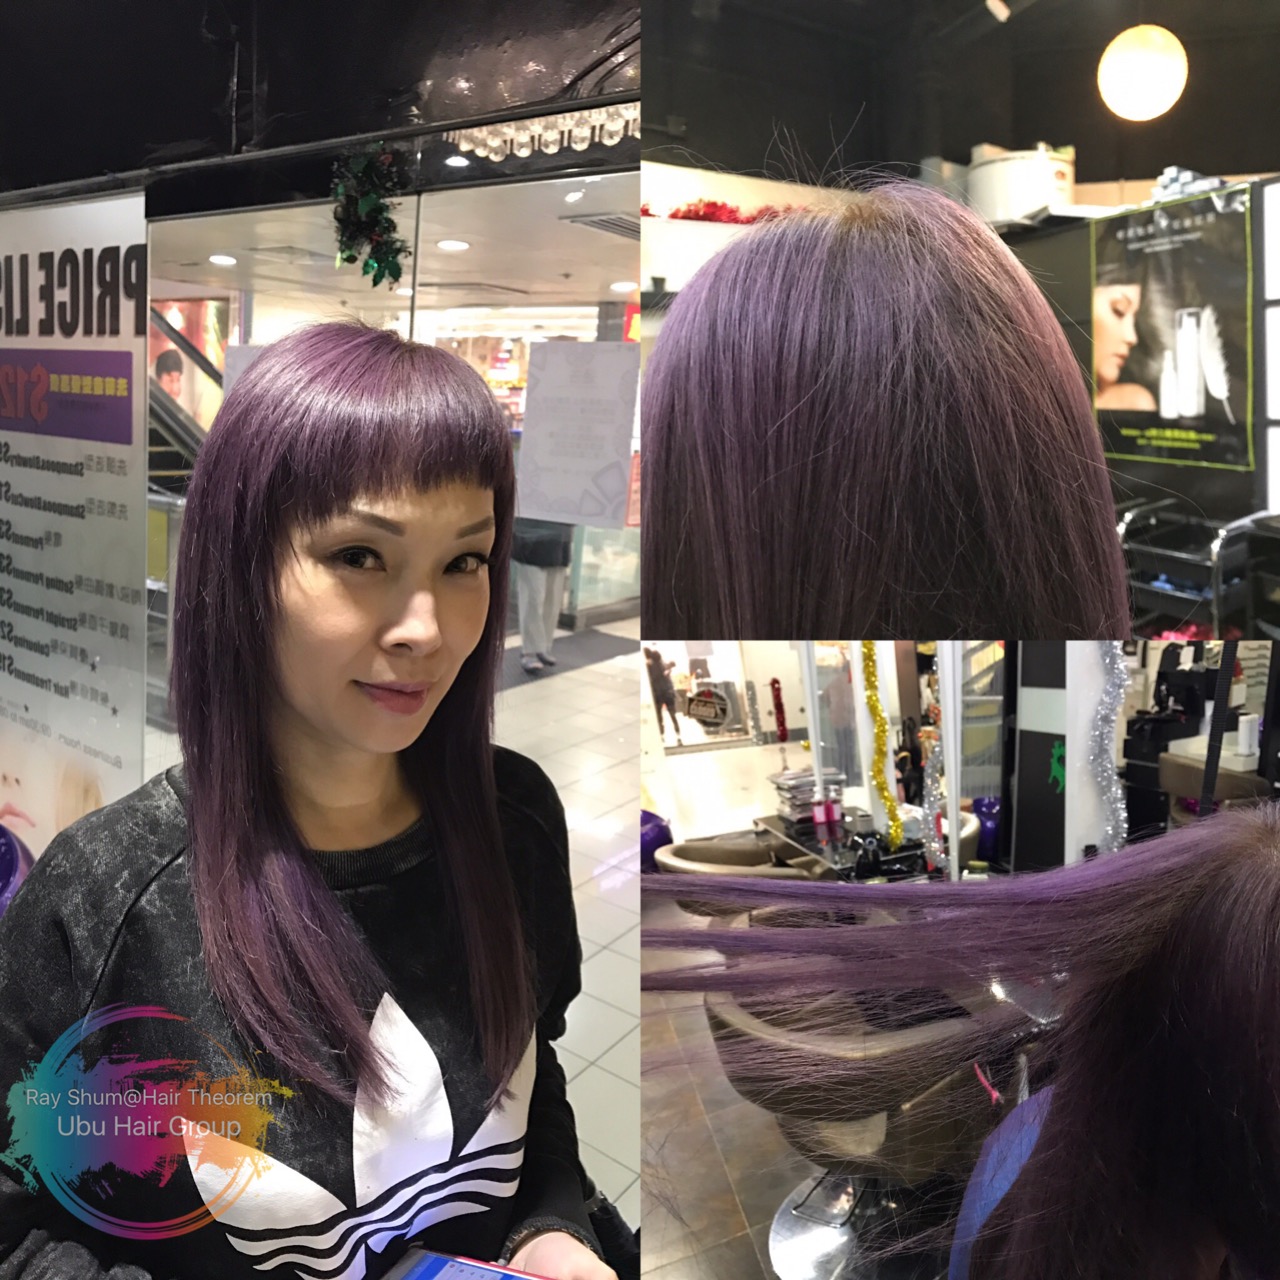 髮型作品參考:Smoke purple color